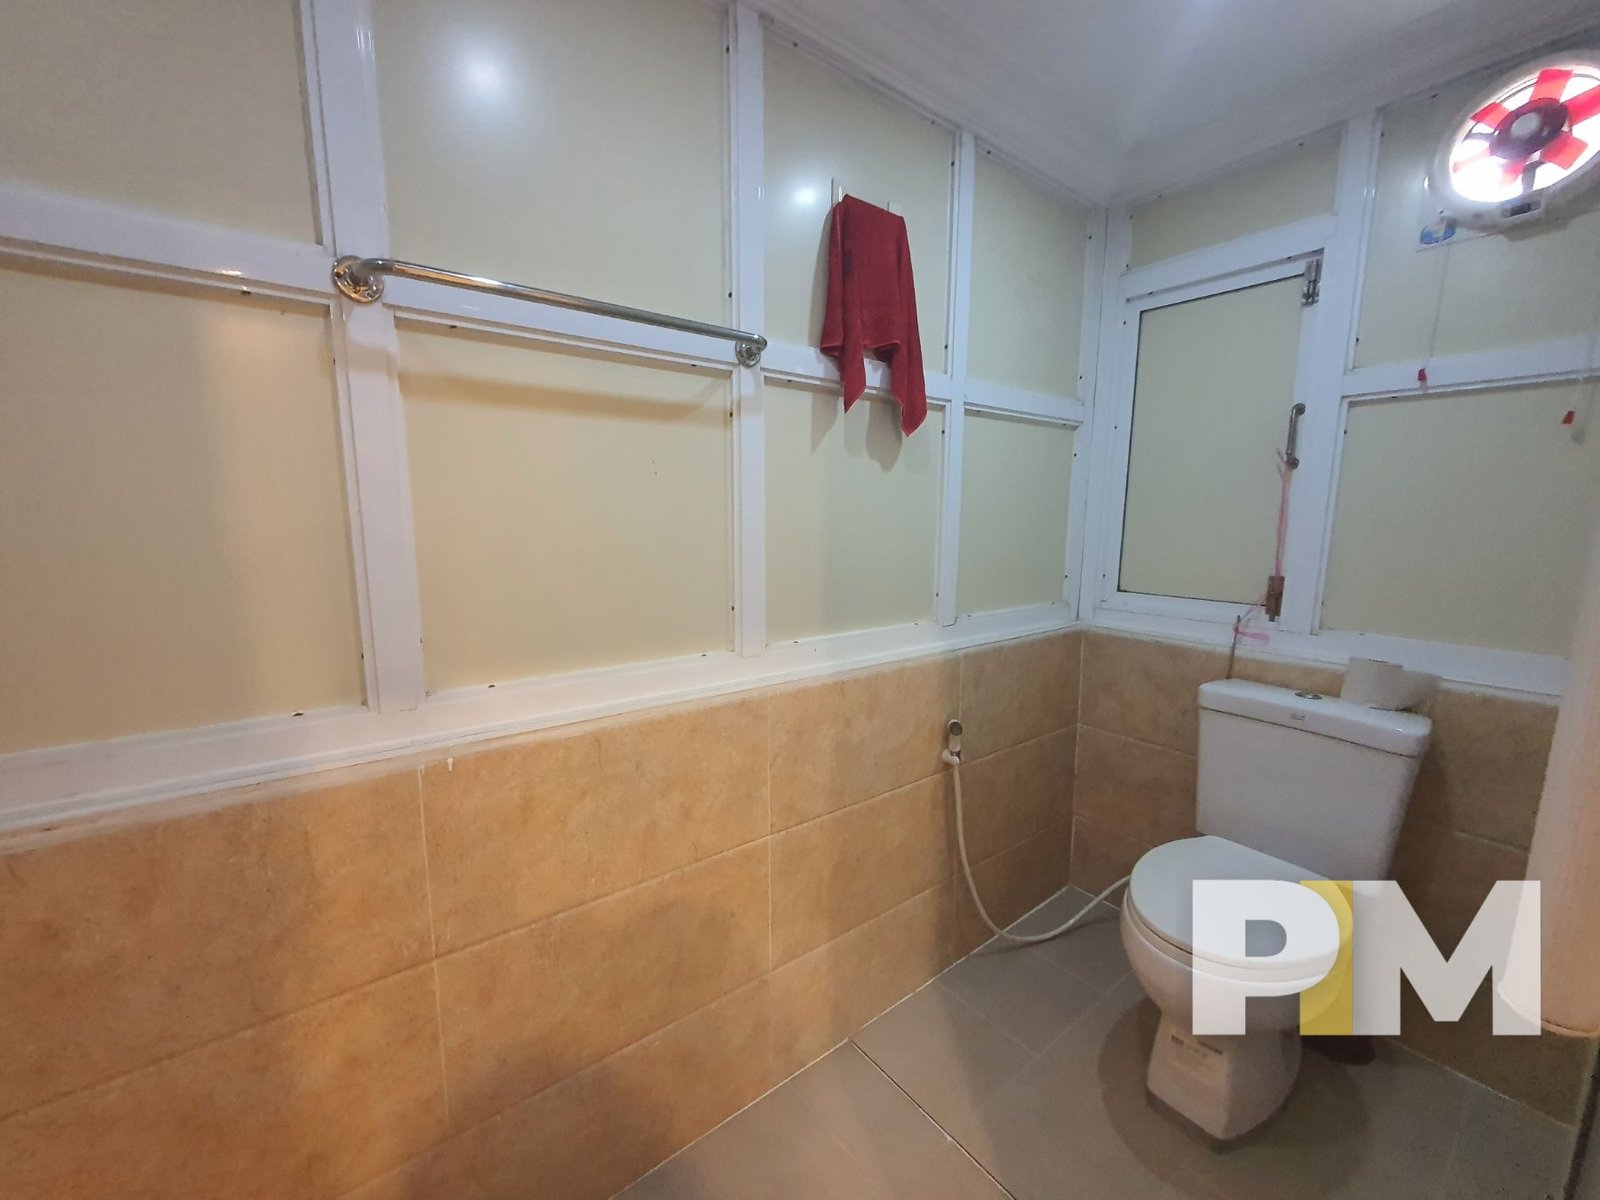 bathroom - yangon real estate